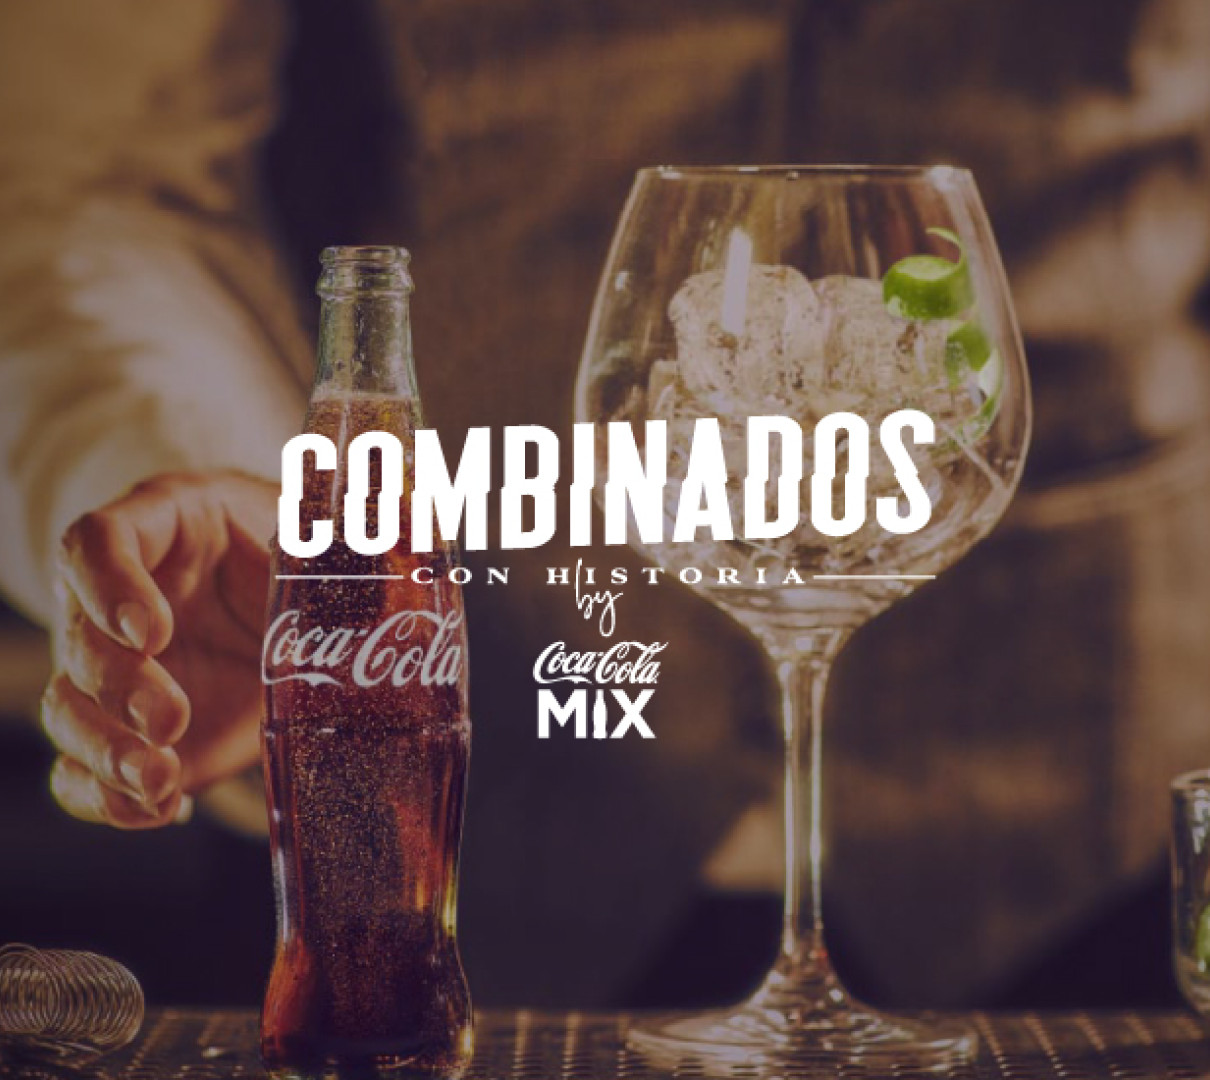 modvirke Stratford på Avon inflation Coca-Cola Mix: llega 'Combinados con historia'